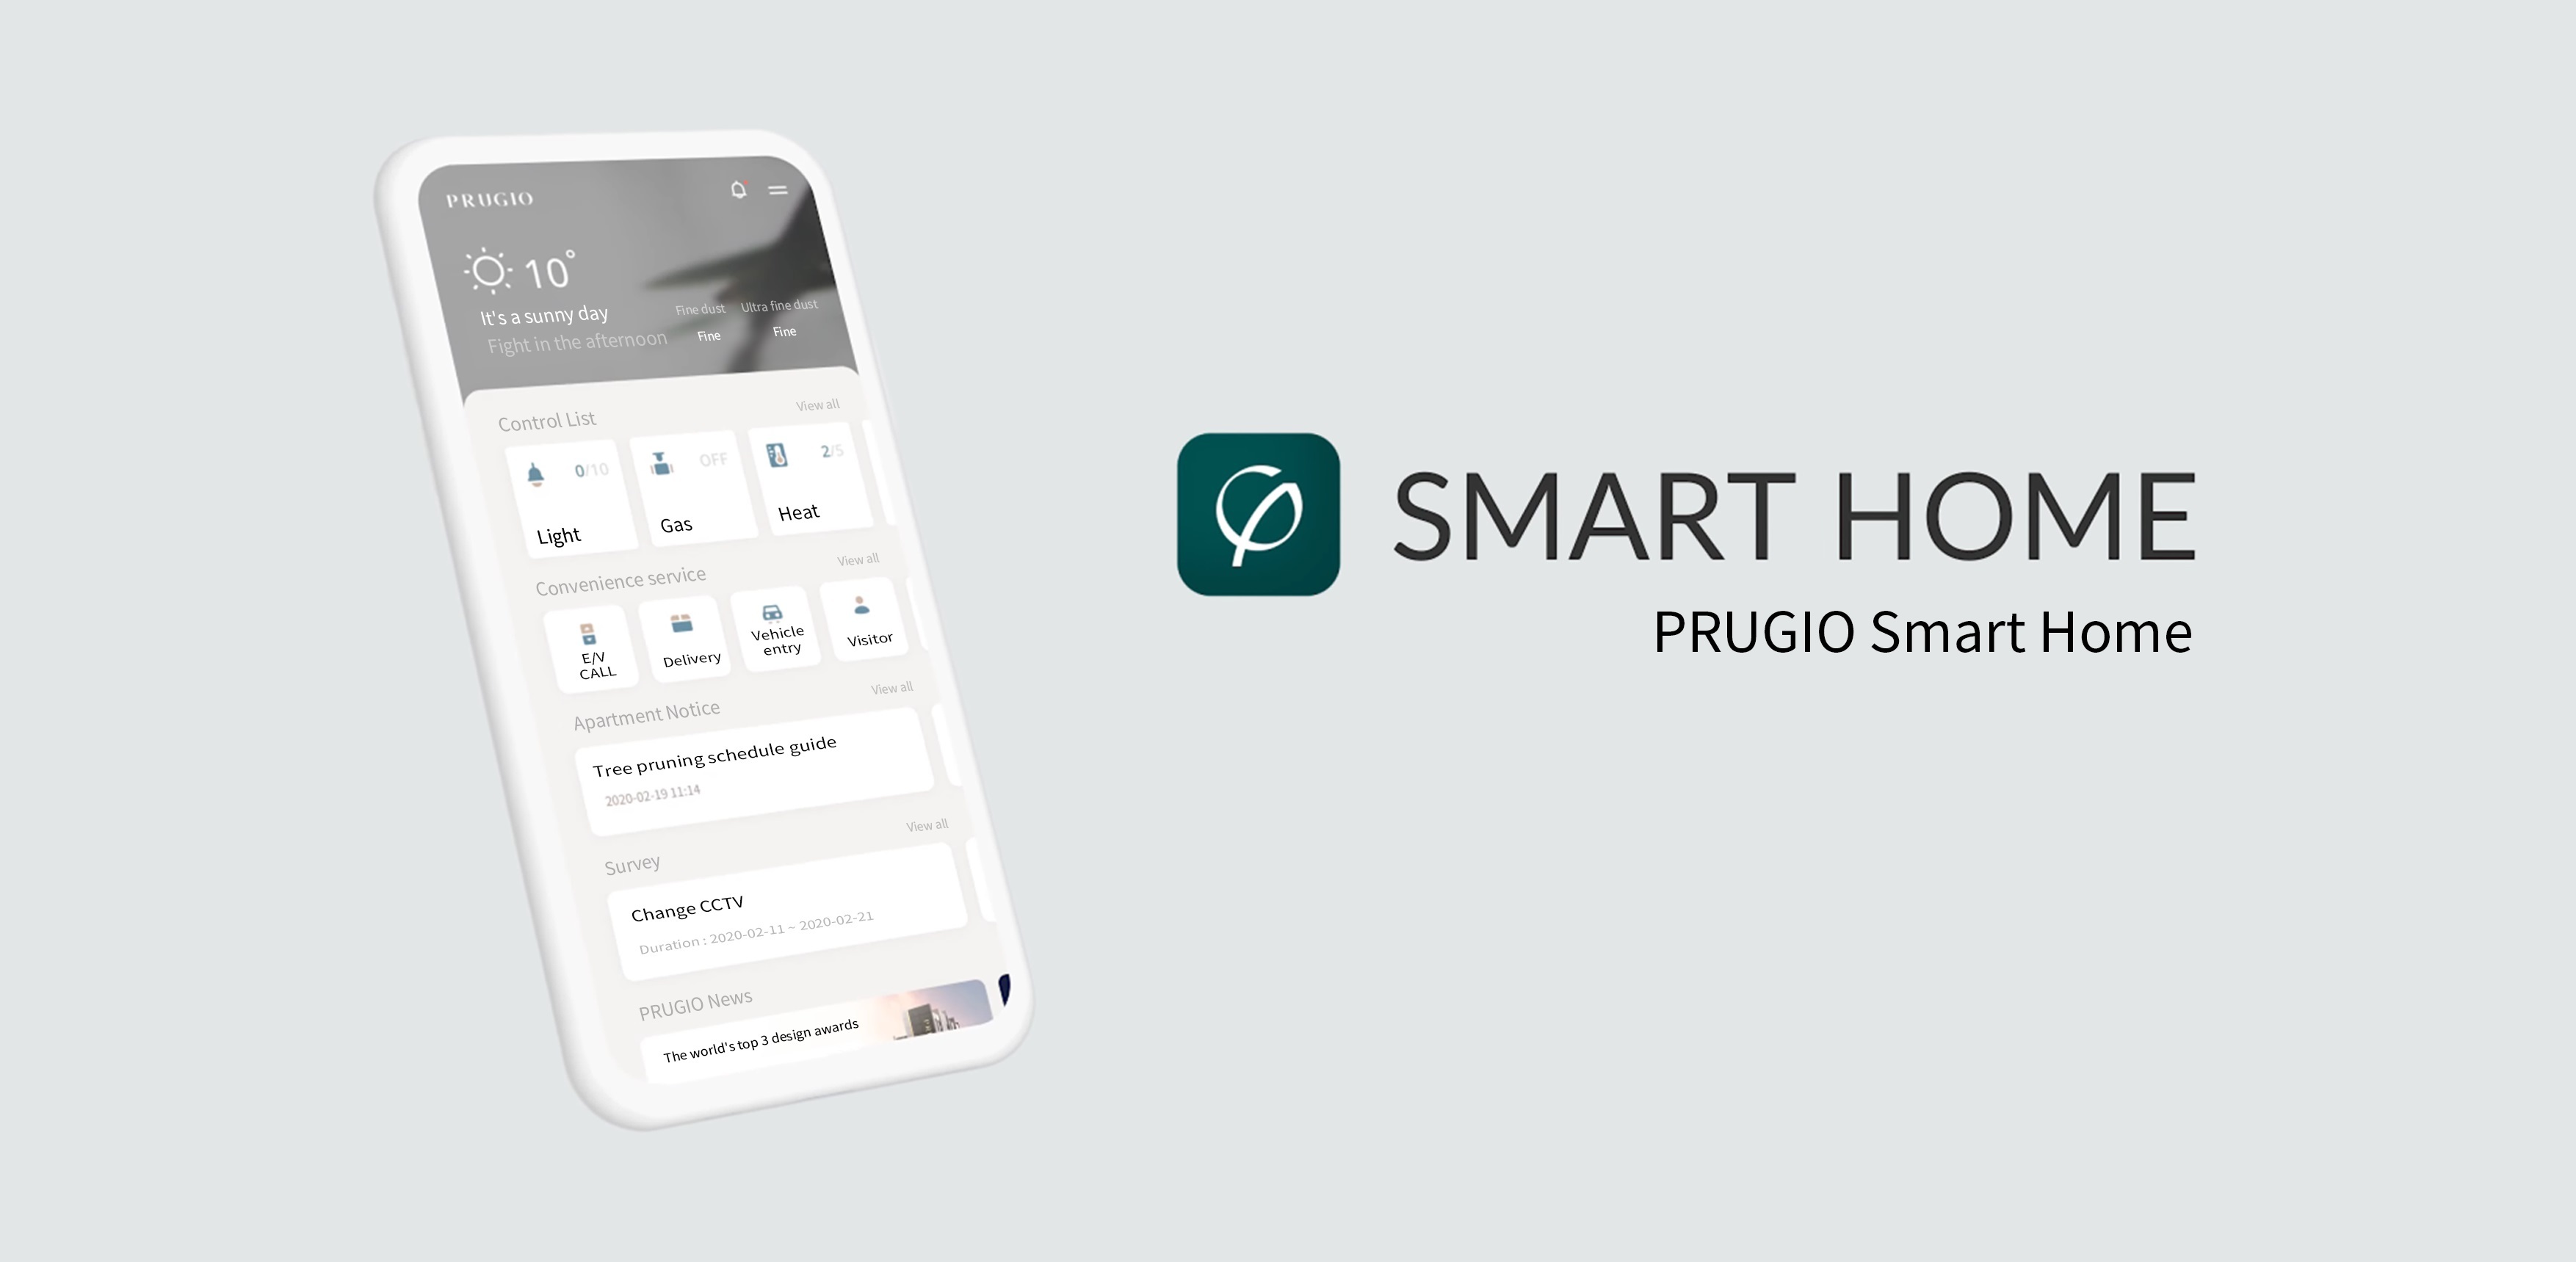 Prugio Smart Home Application